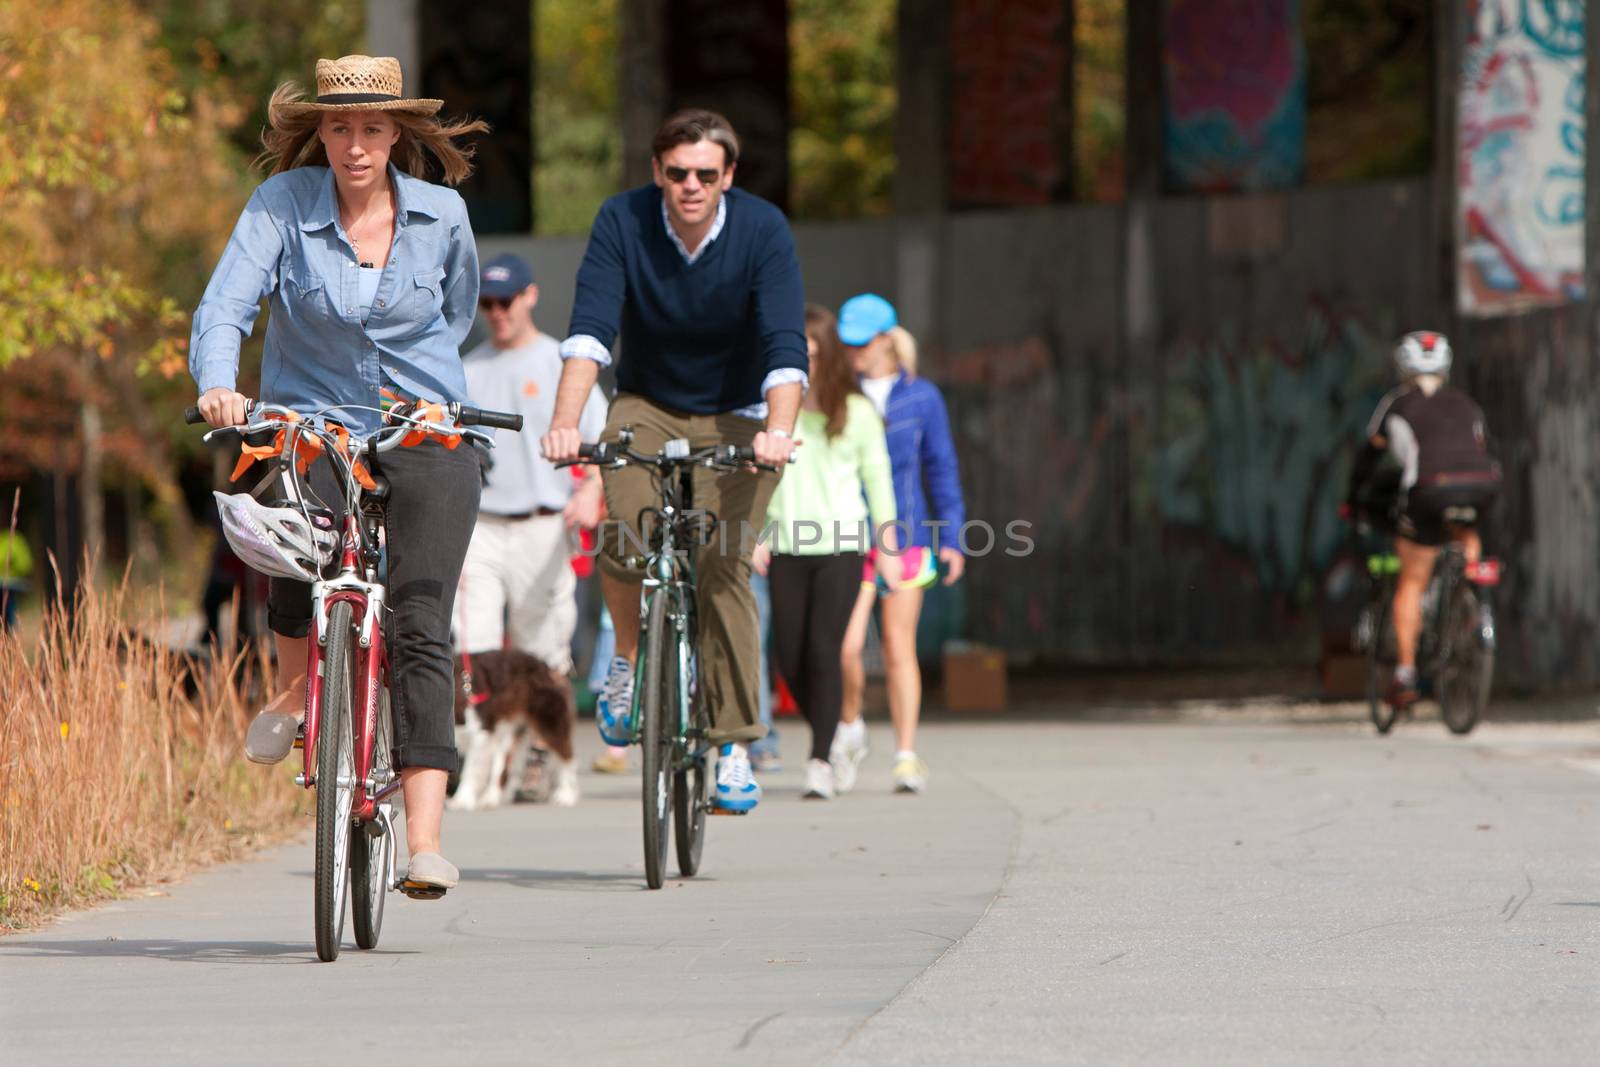 Couple Rides Bikes Along Urban Development Trail In Atlanta by BluIz60